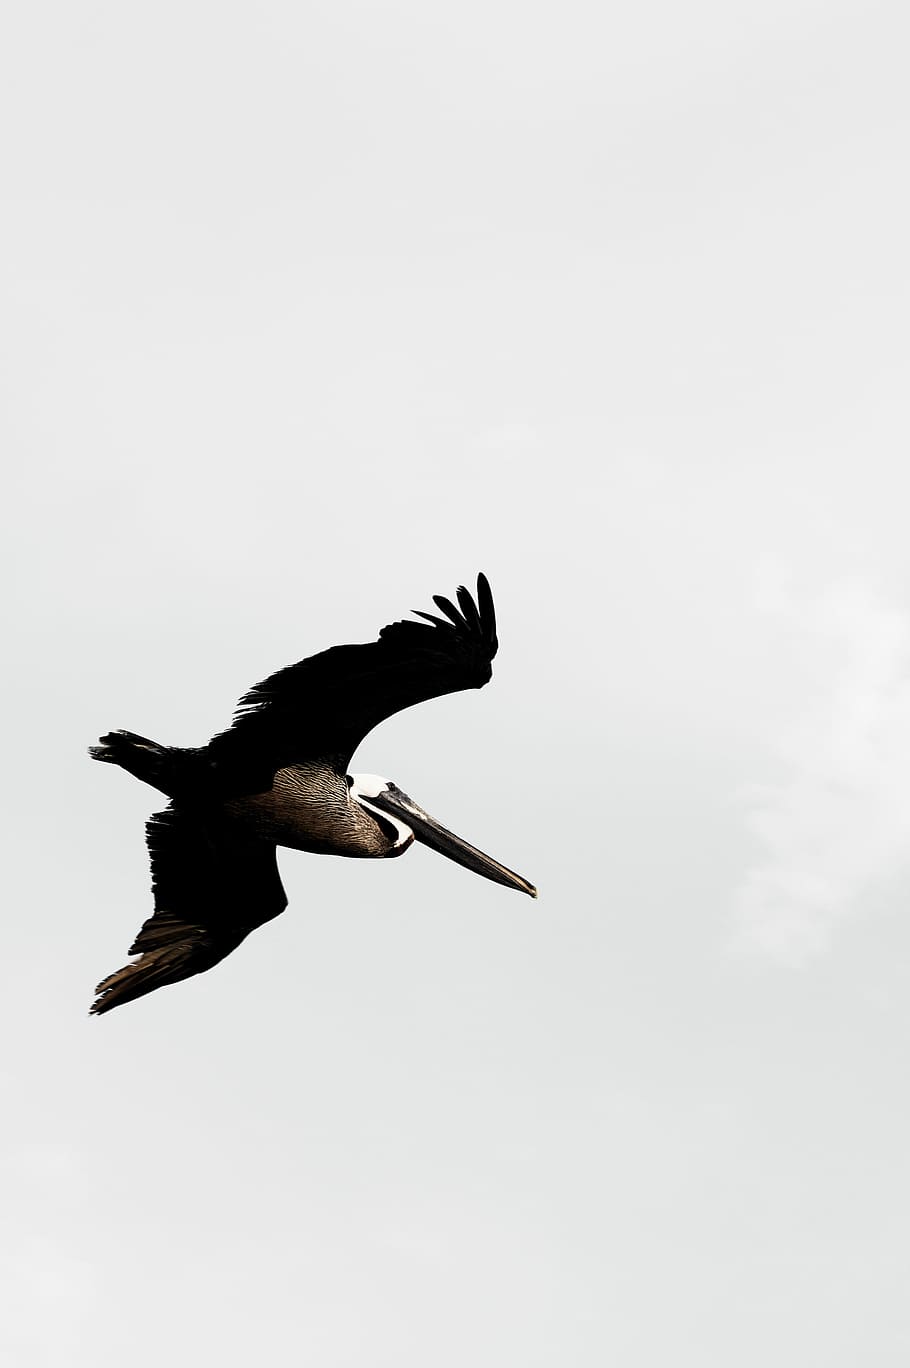 Free download | white, black, large-sized bird, flying, daytime, large